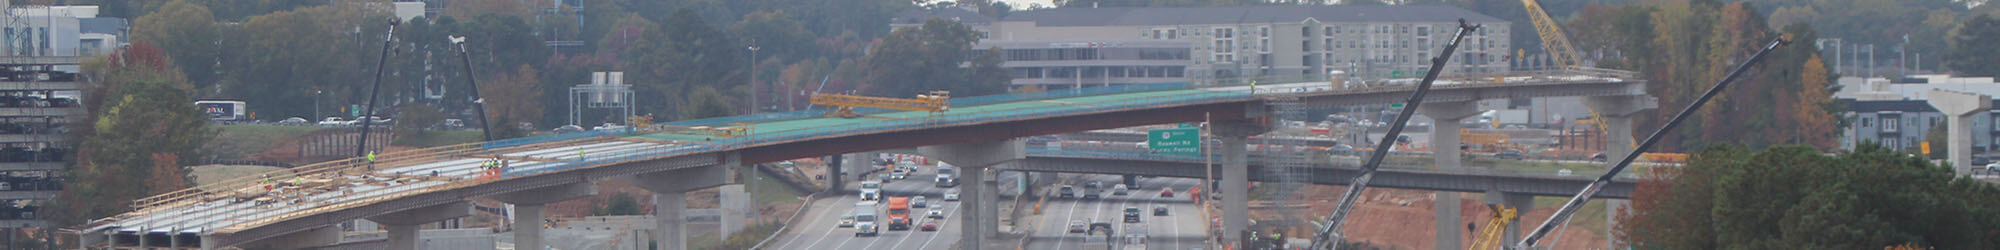 highway construction injury attorney in Atlanta